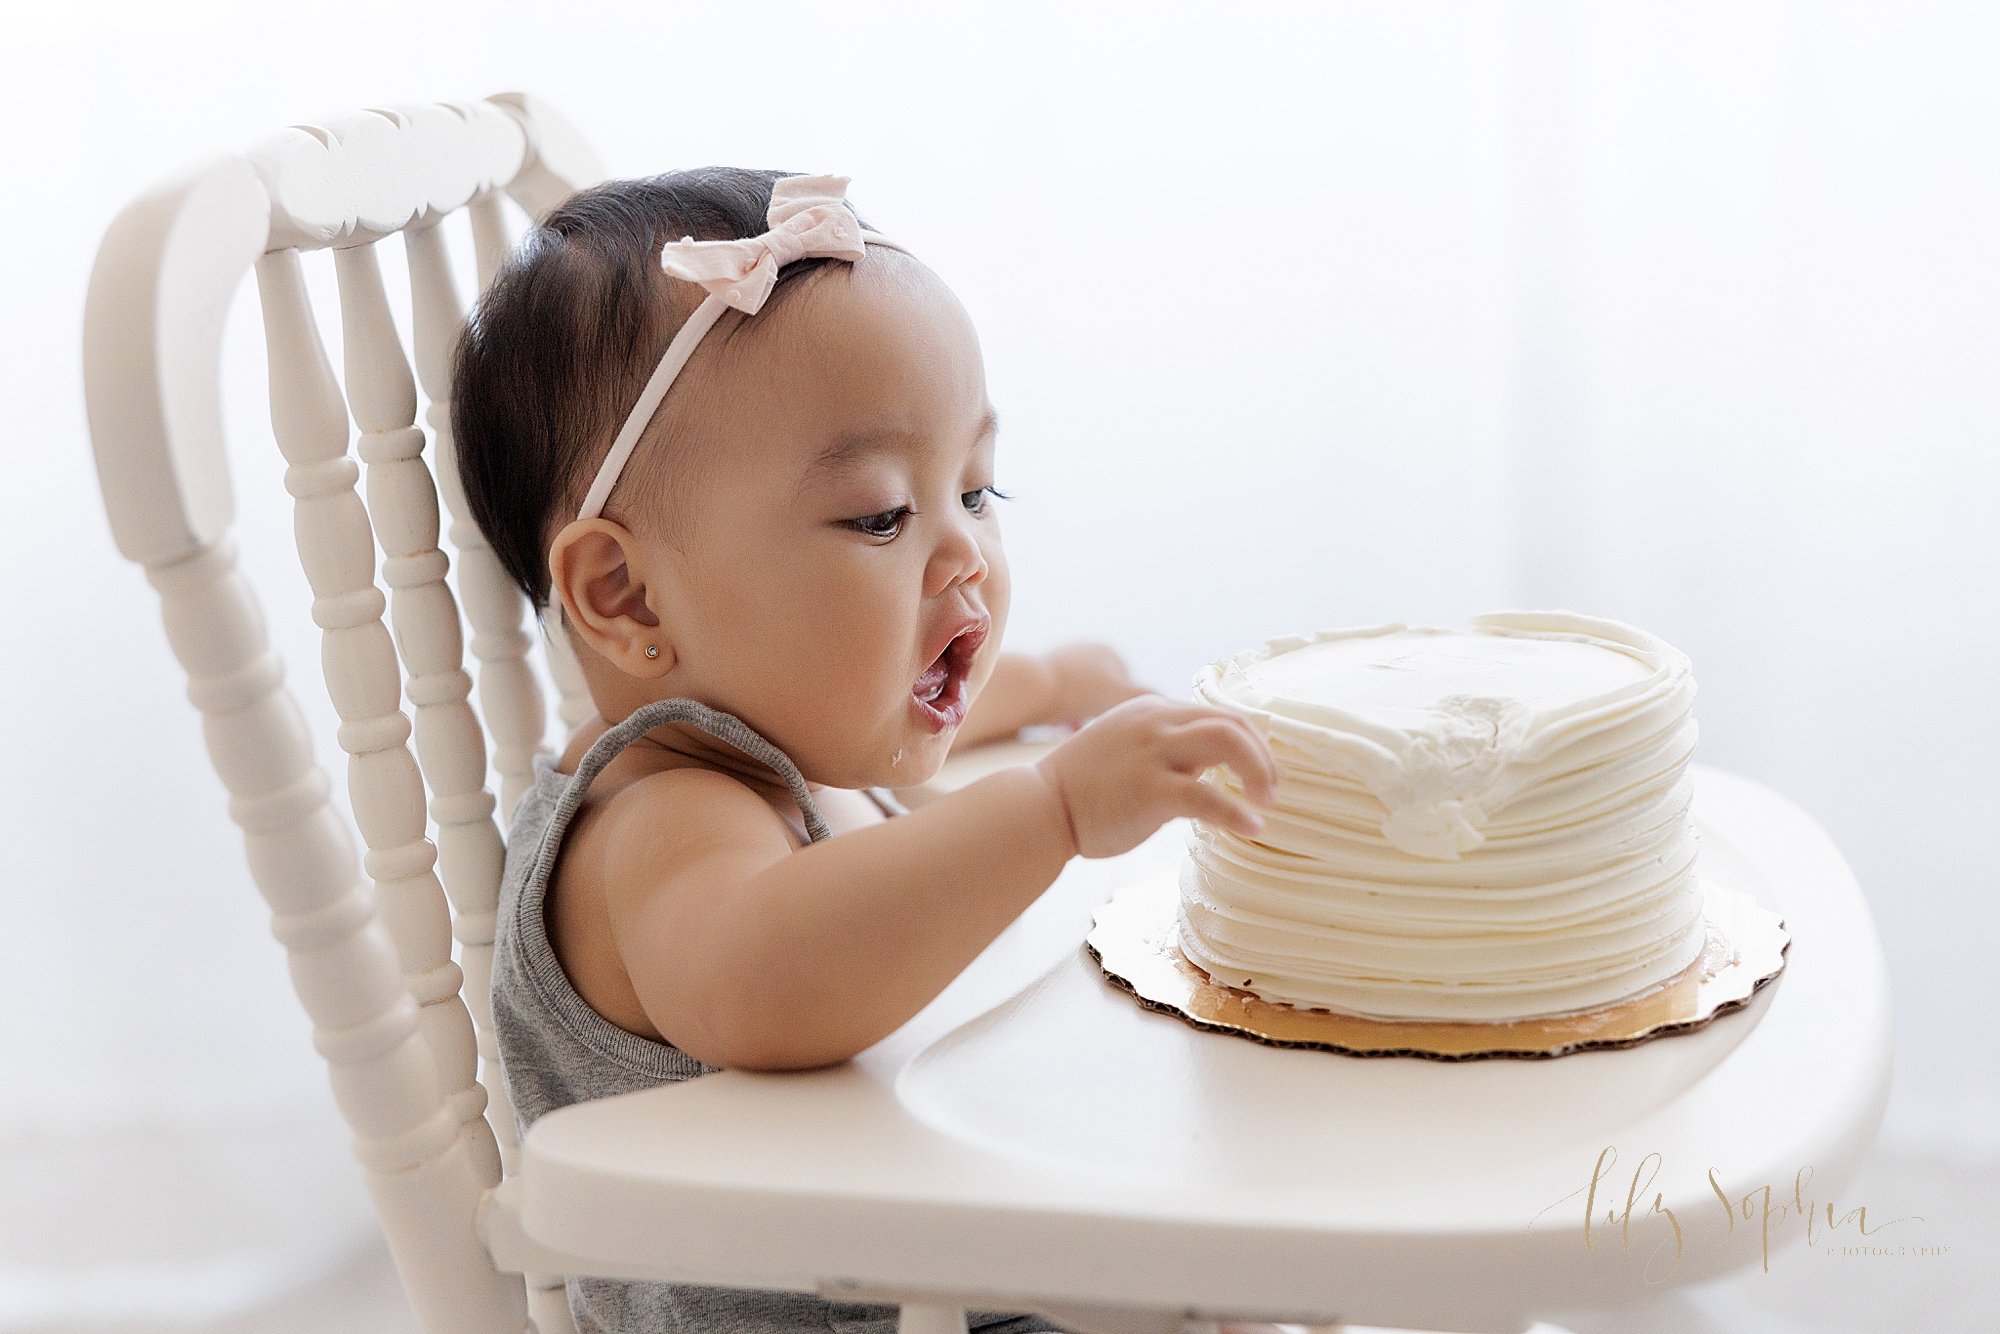 intown-atlanta-decatur-brookhaven-buckhead-first-birthday-cake-smash-photoshoot-baby-girl-family-studio-photos_5318.jpg